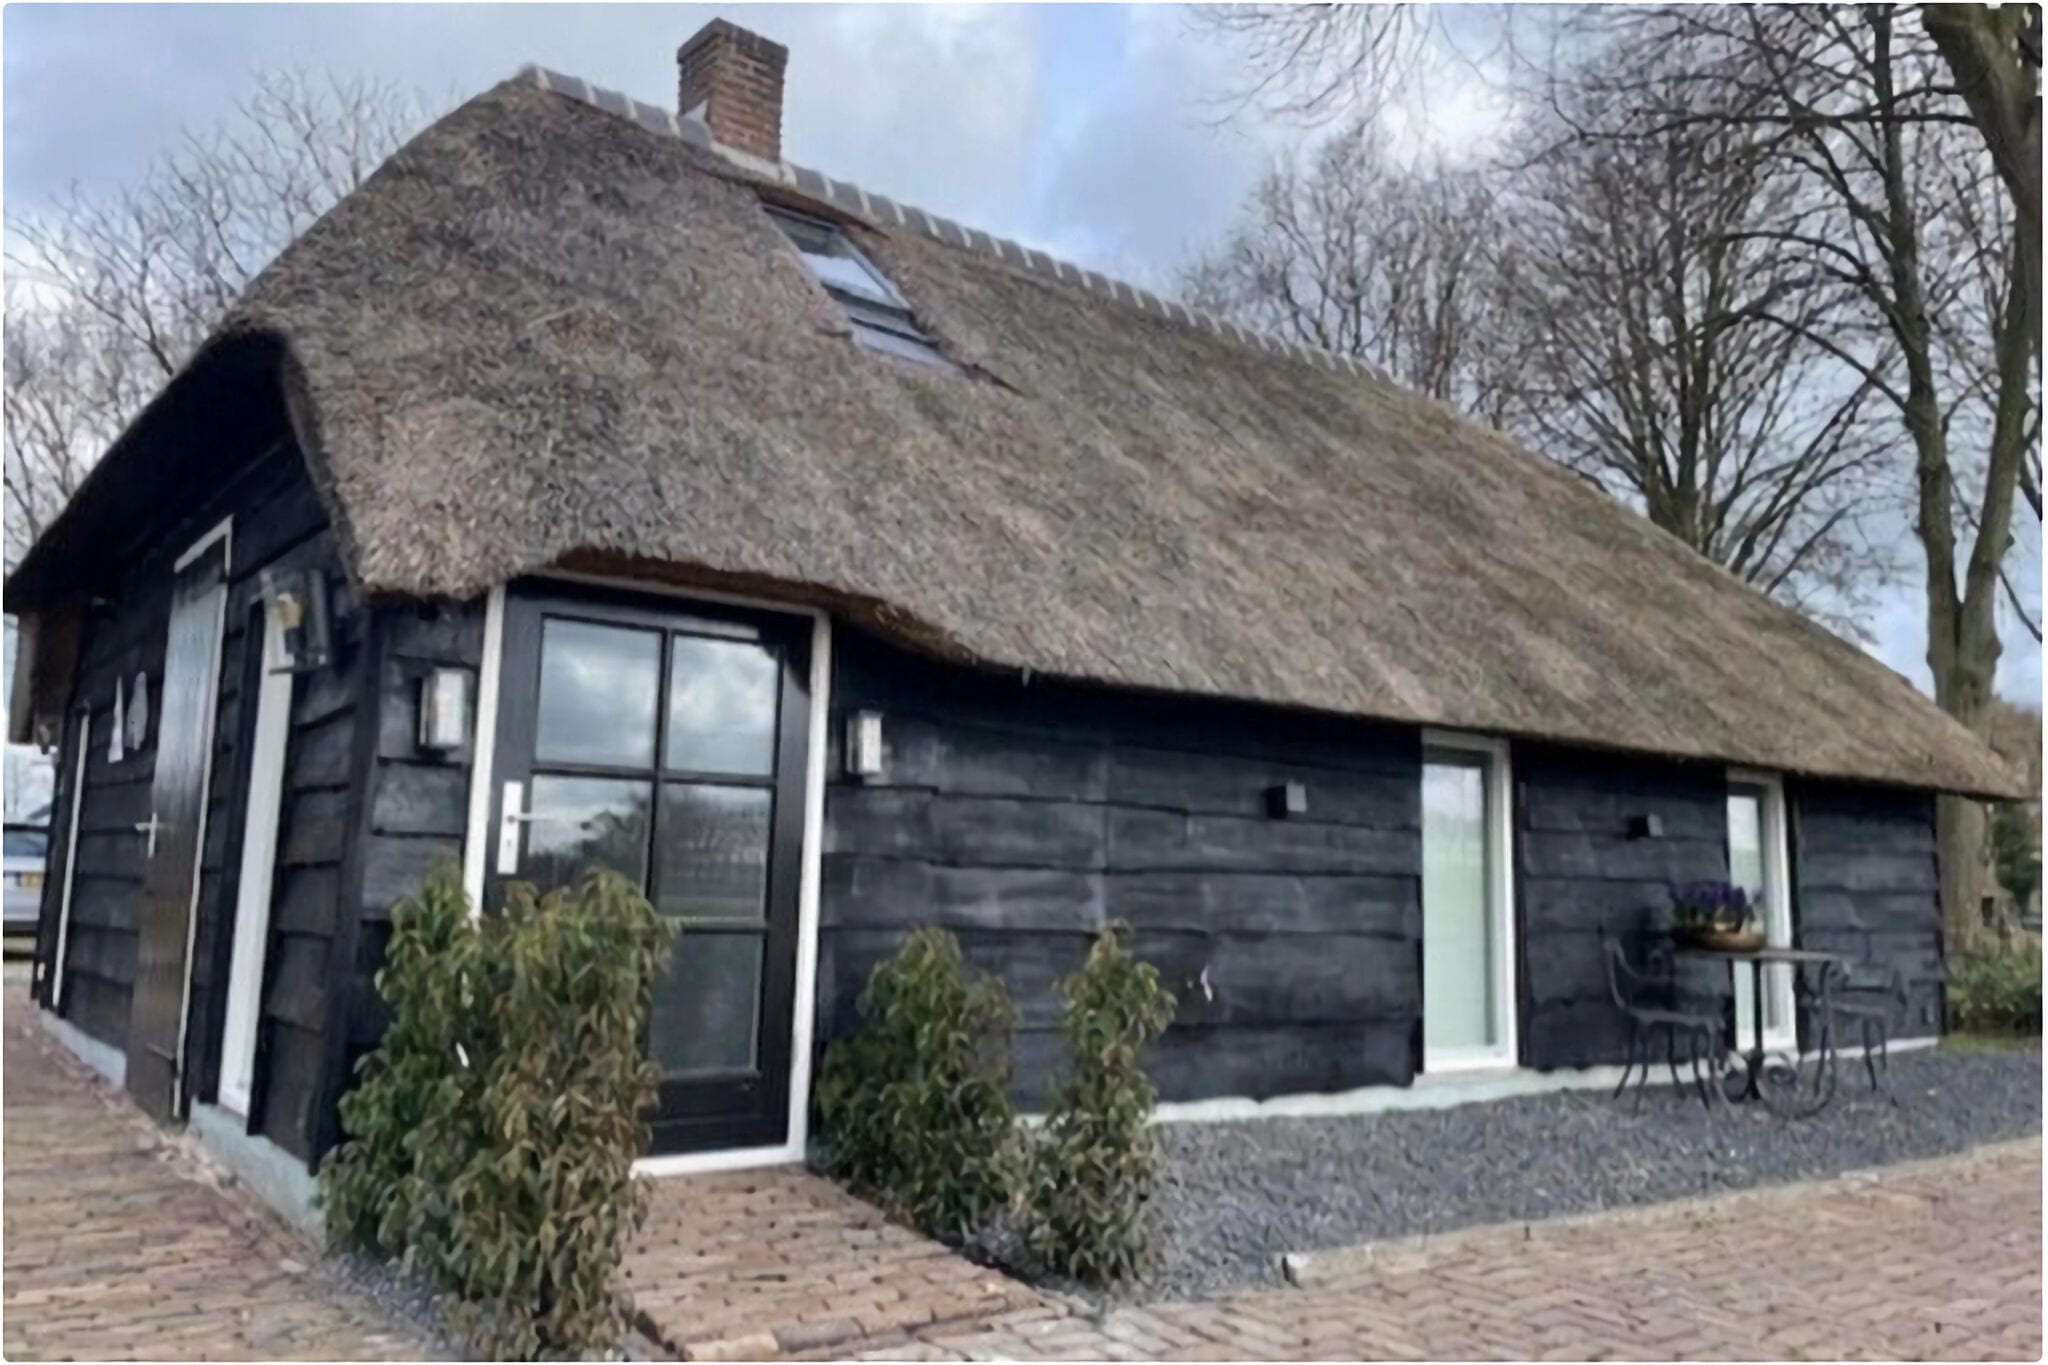 Maison de vacances Heeresteeg à Nieuwleusen avec jardin